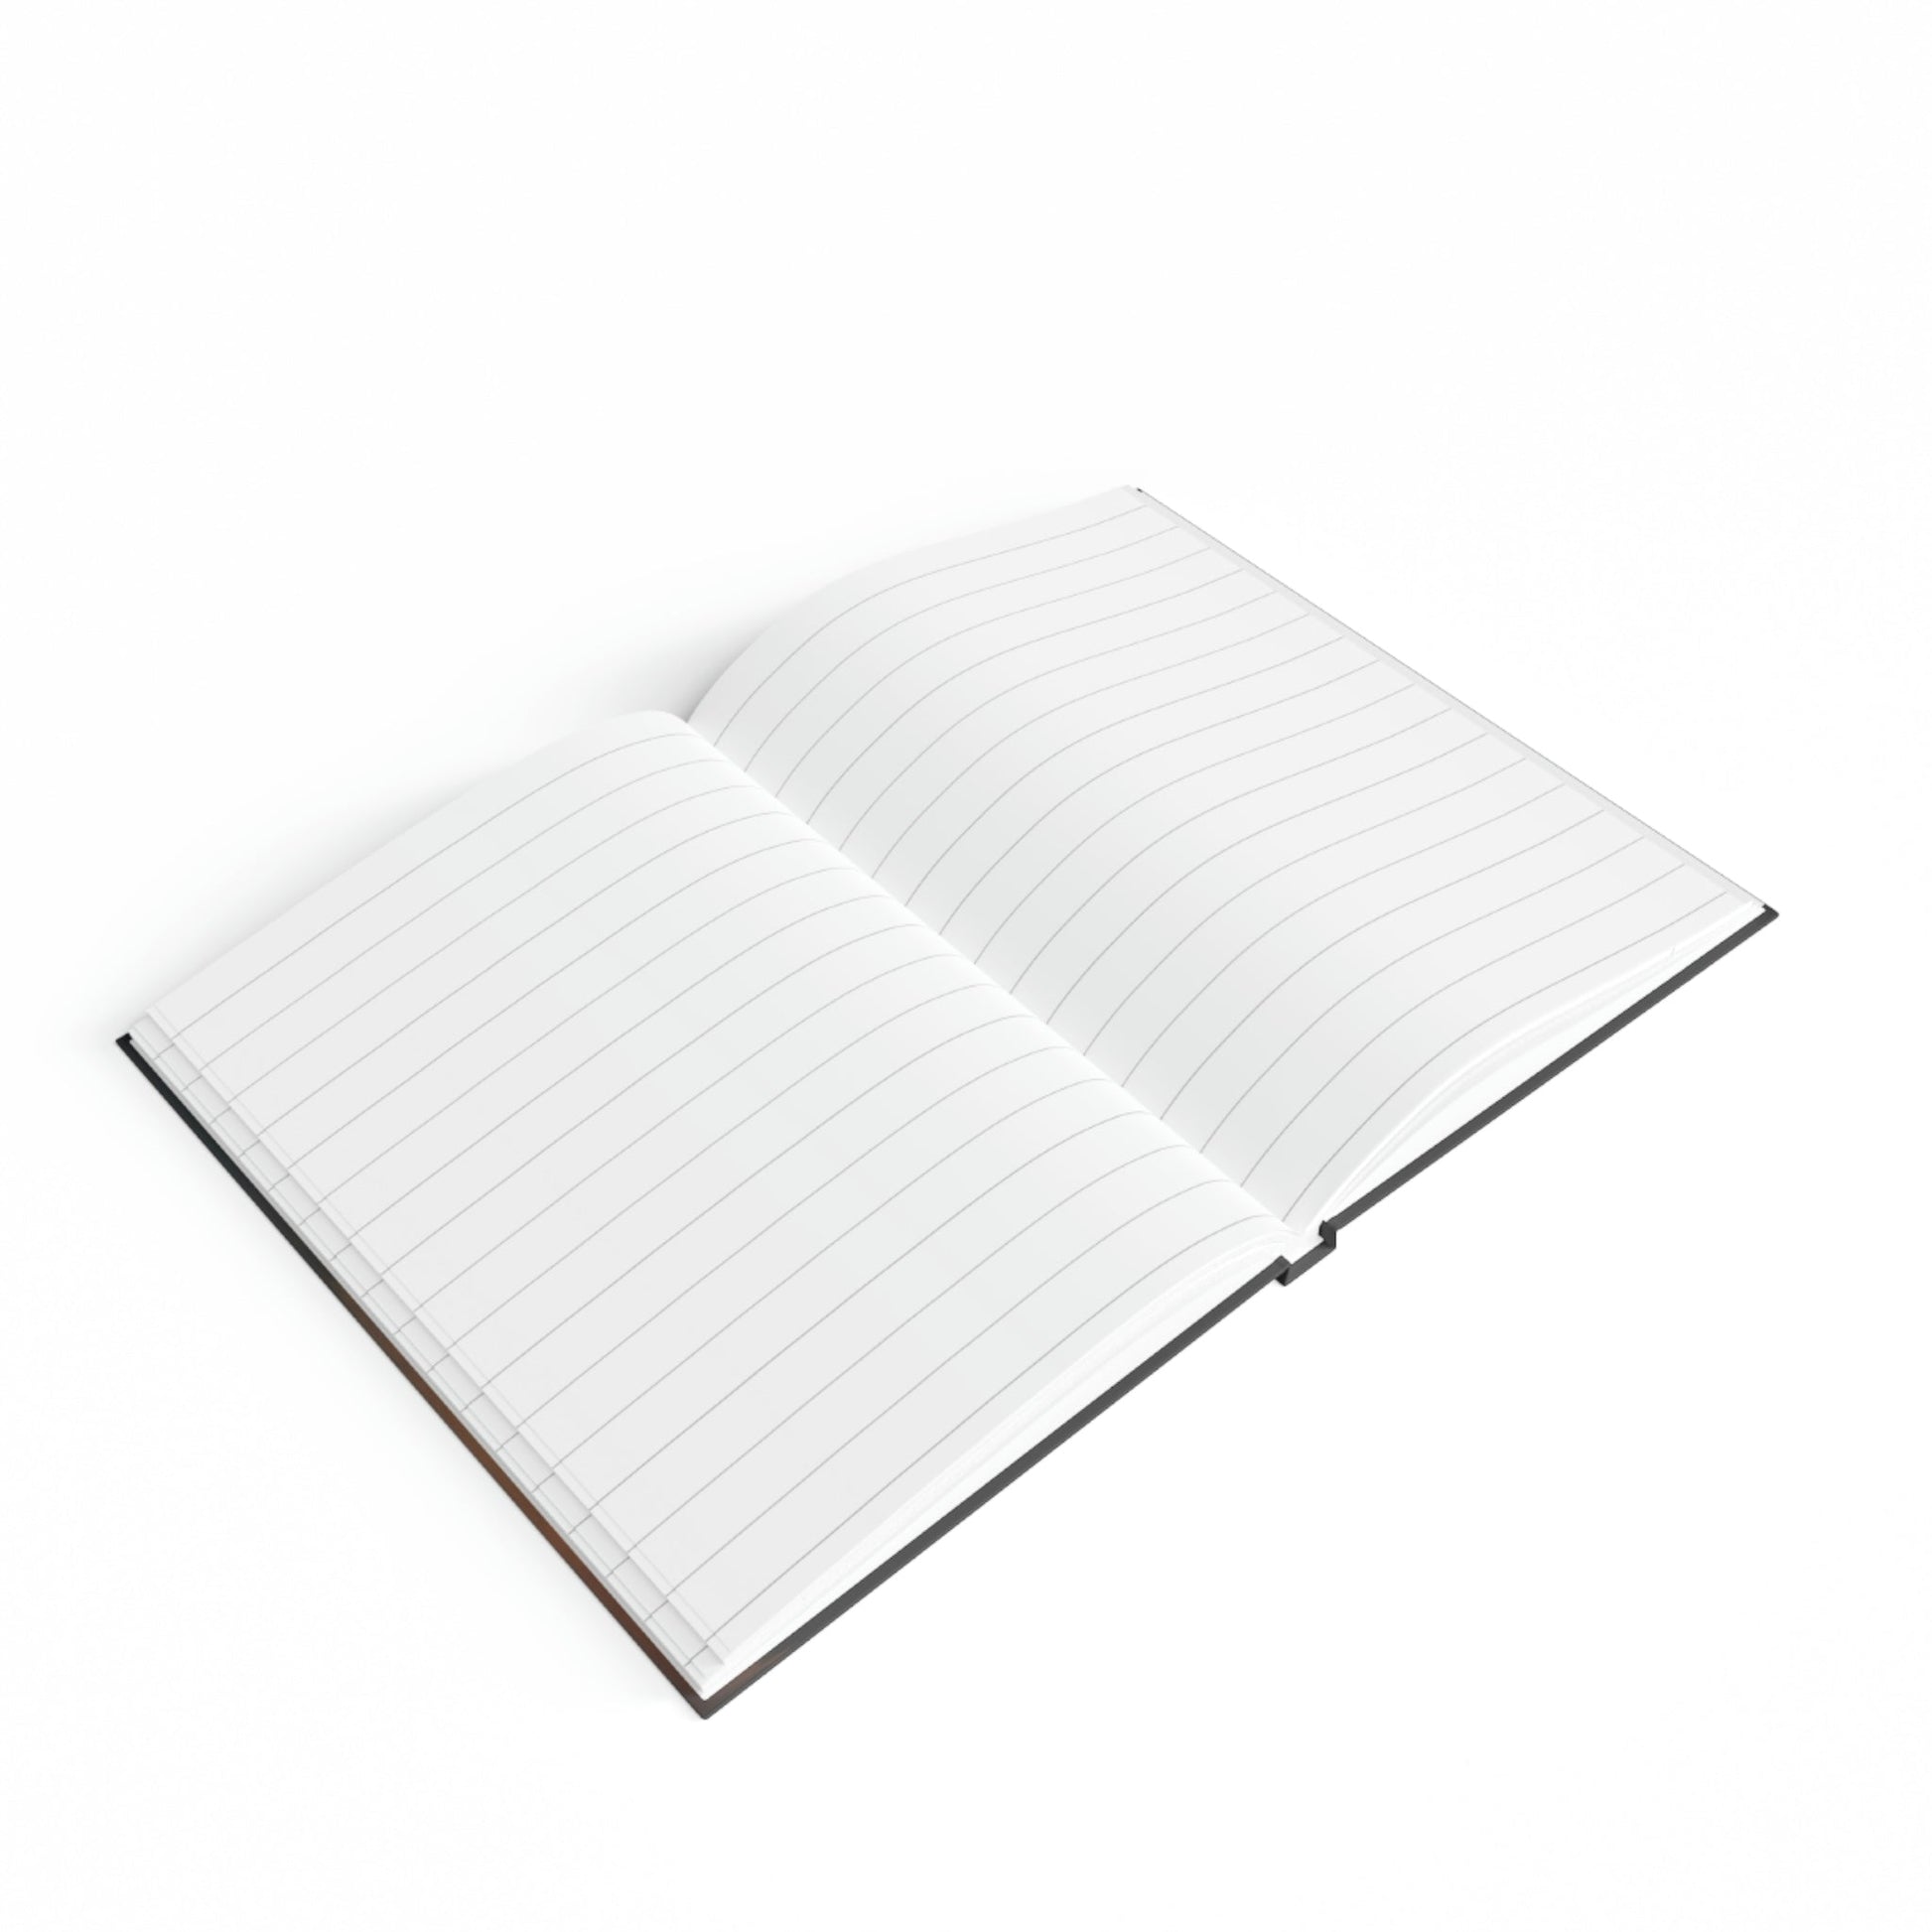 Dinosaur Sketch Book - Hat - Hard Backed Journal